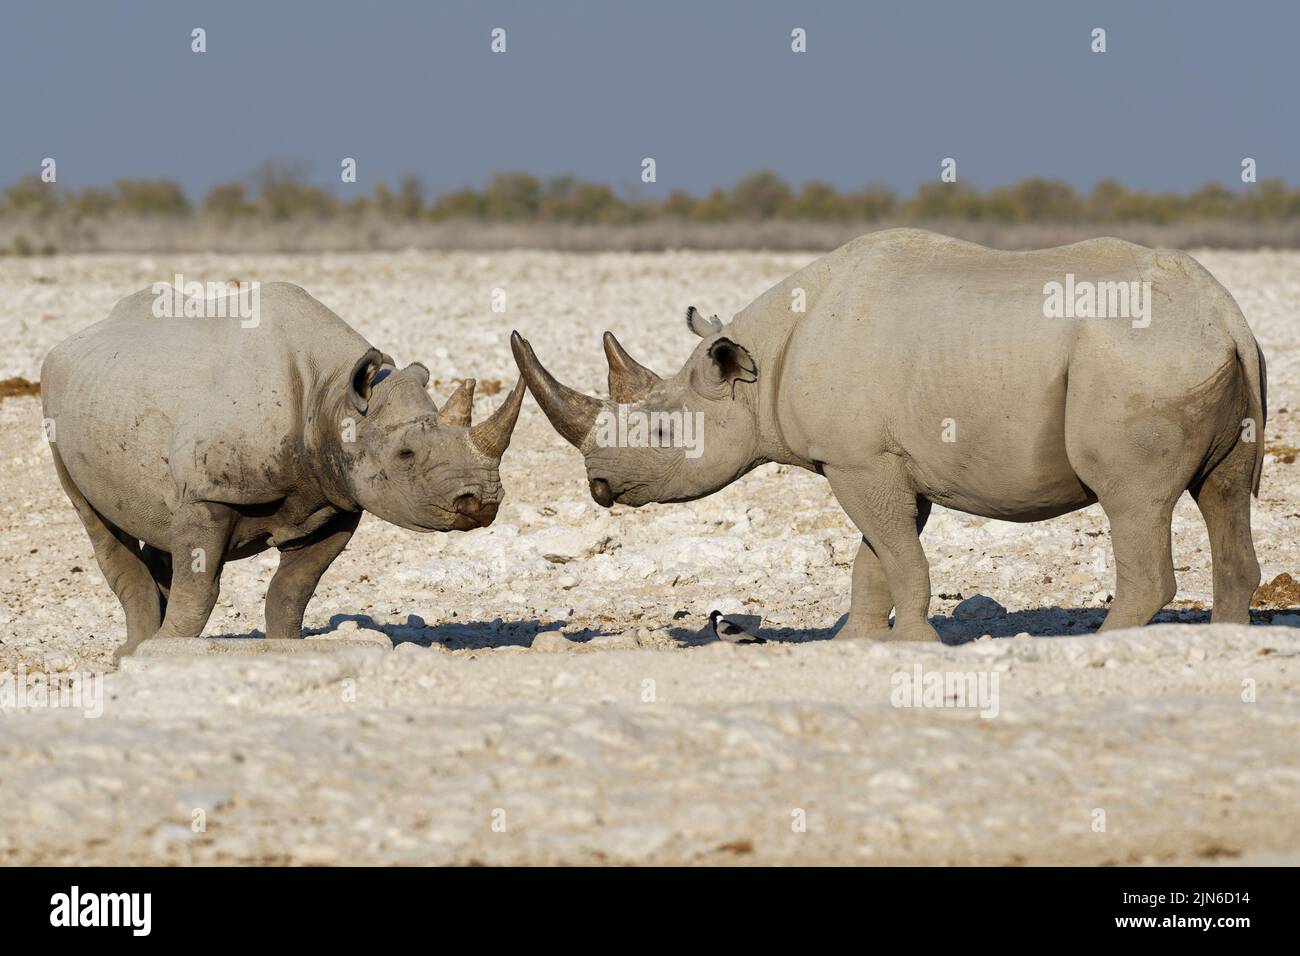 Black rhinoceroses (Diceros bicornis), two adults standing face to face at waterhole, Etosha National Park, Namibia, Africa Stock Photo